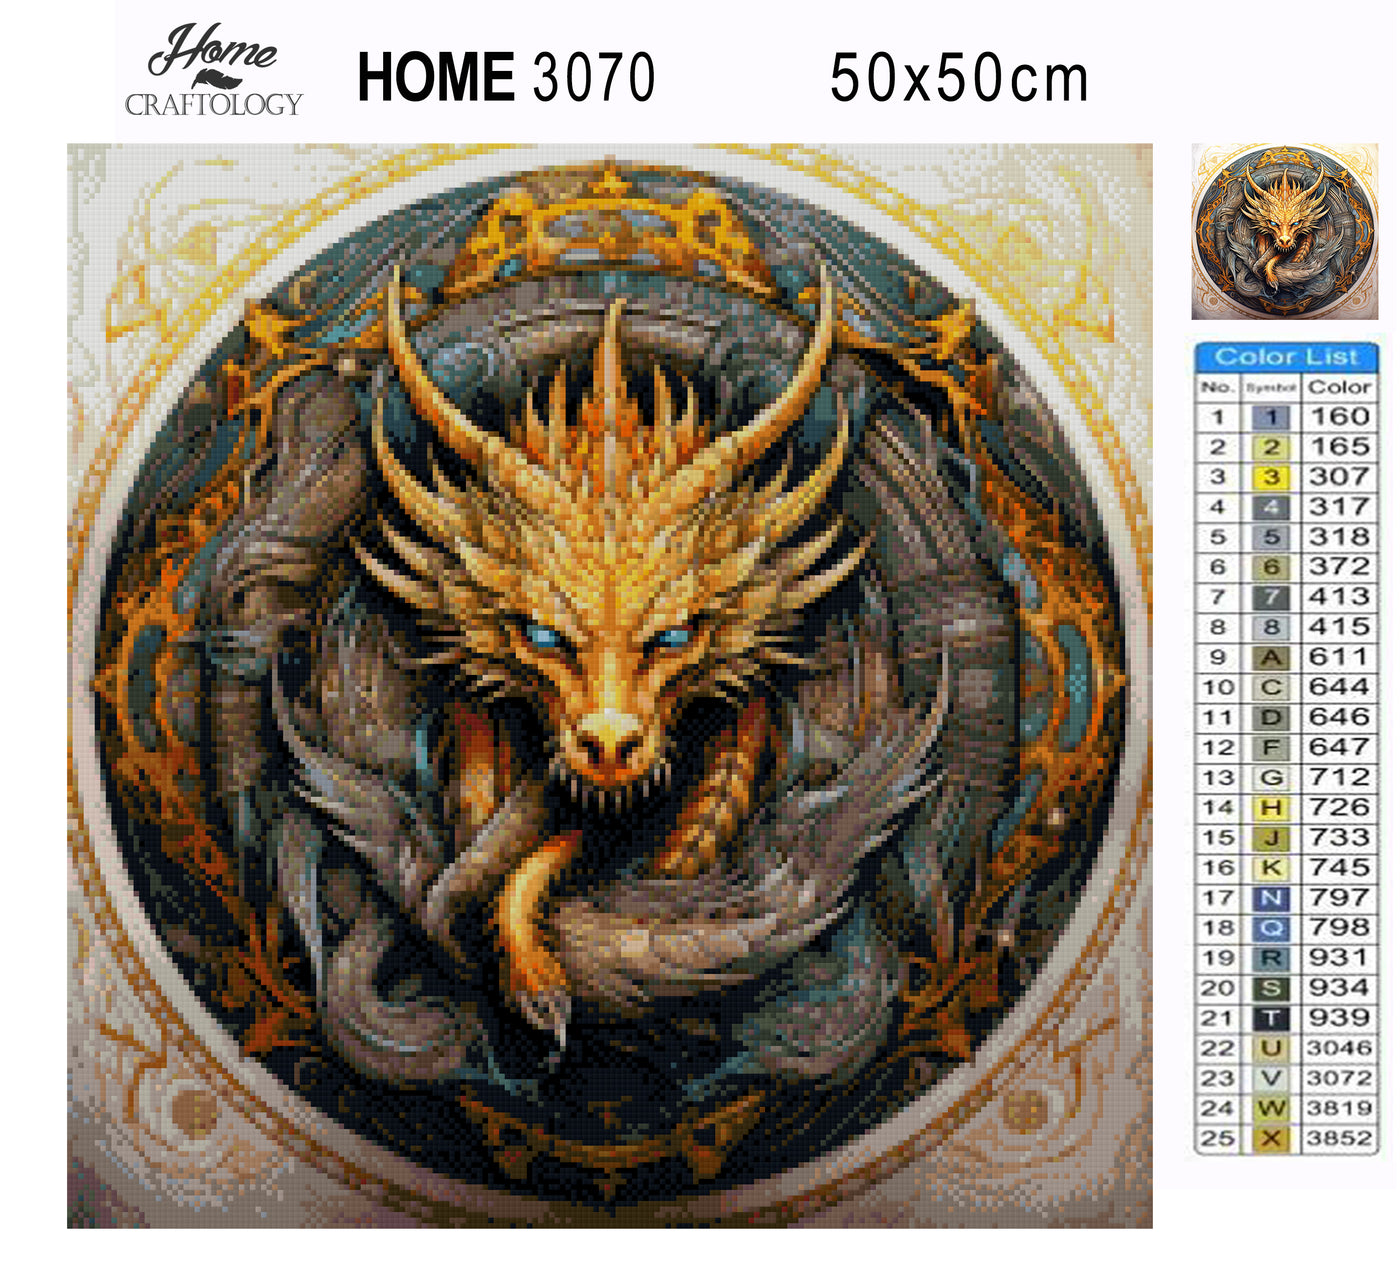 Fierce Dragon - Premium Diamond Painting Kit